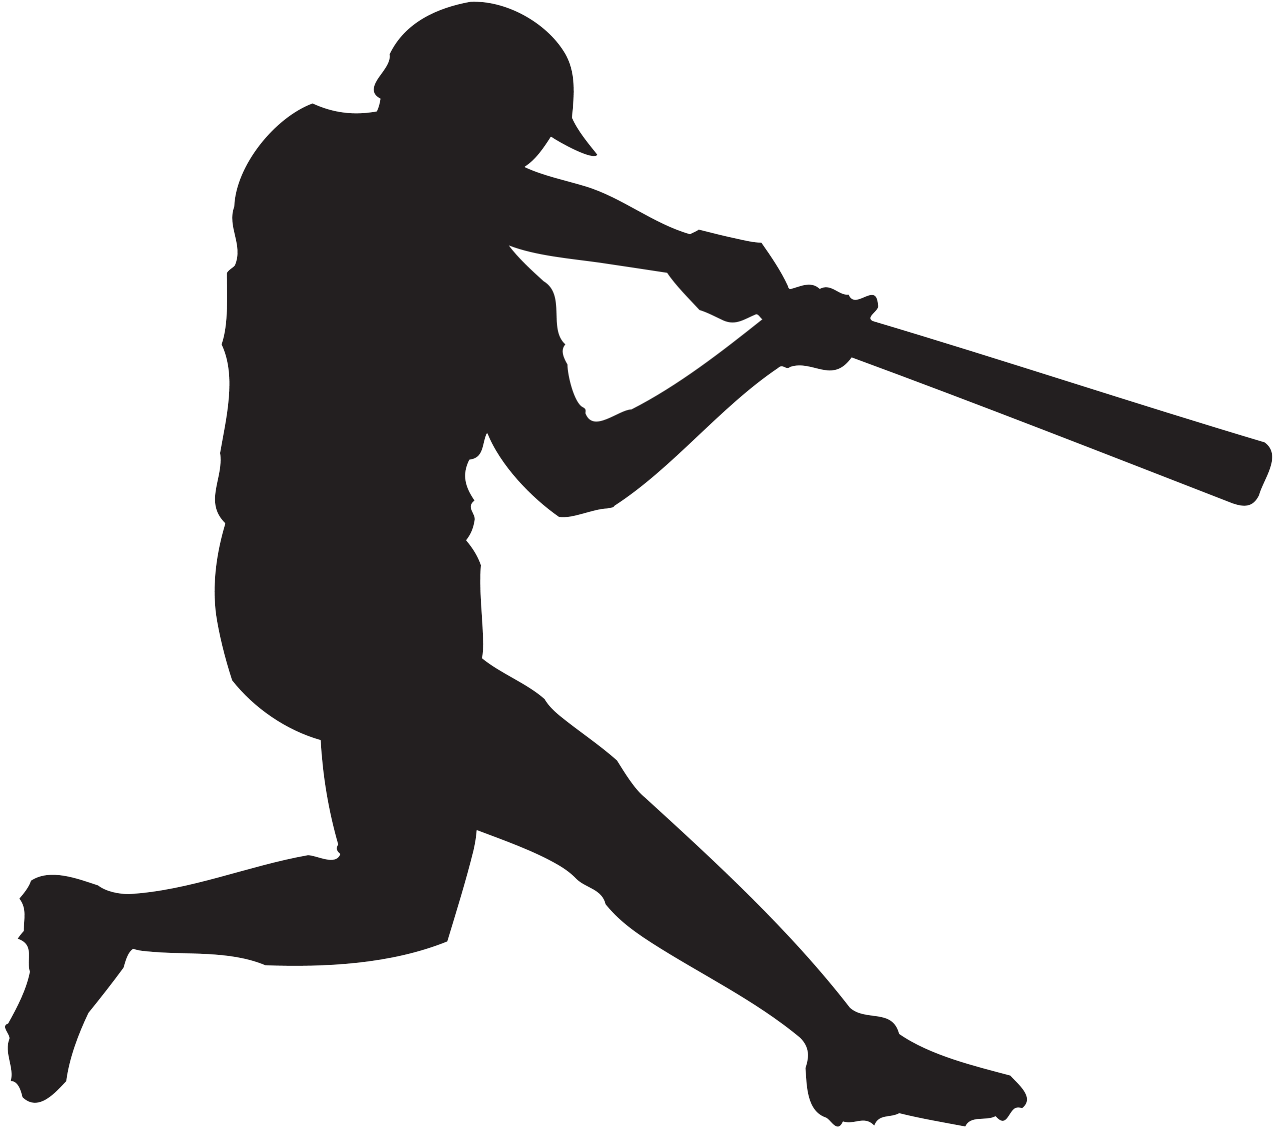 Baseball player Batting Clip art.